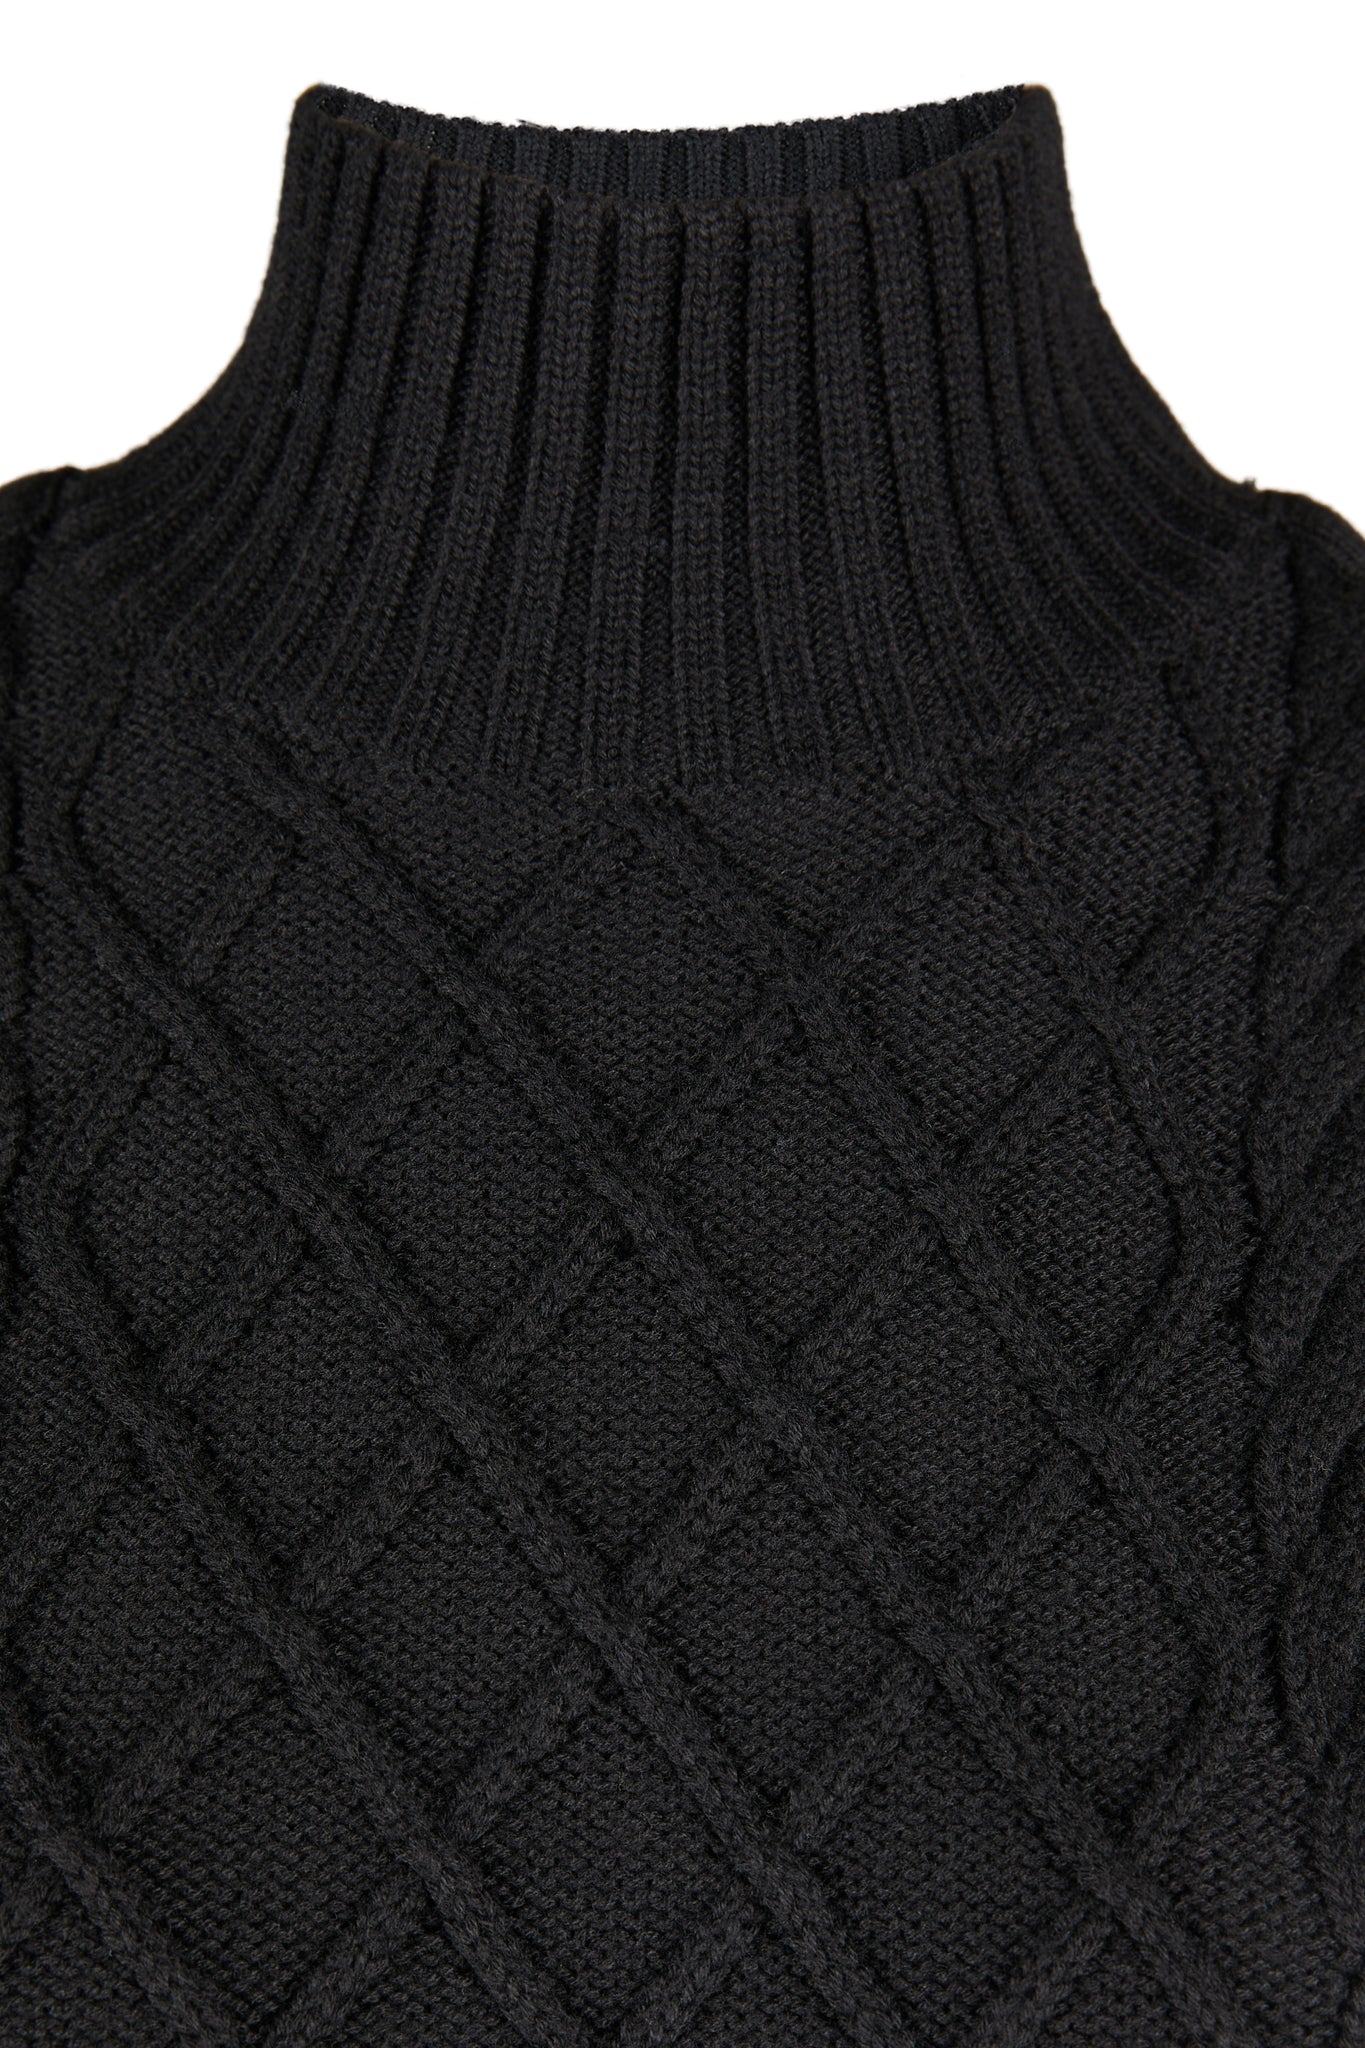 ribbed turtle neck hem detail on womens black sleeveless cable knit mini dress with ribbed hem 